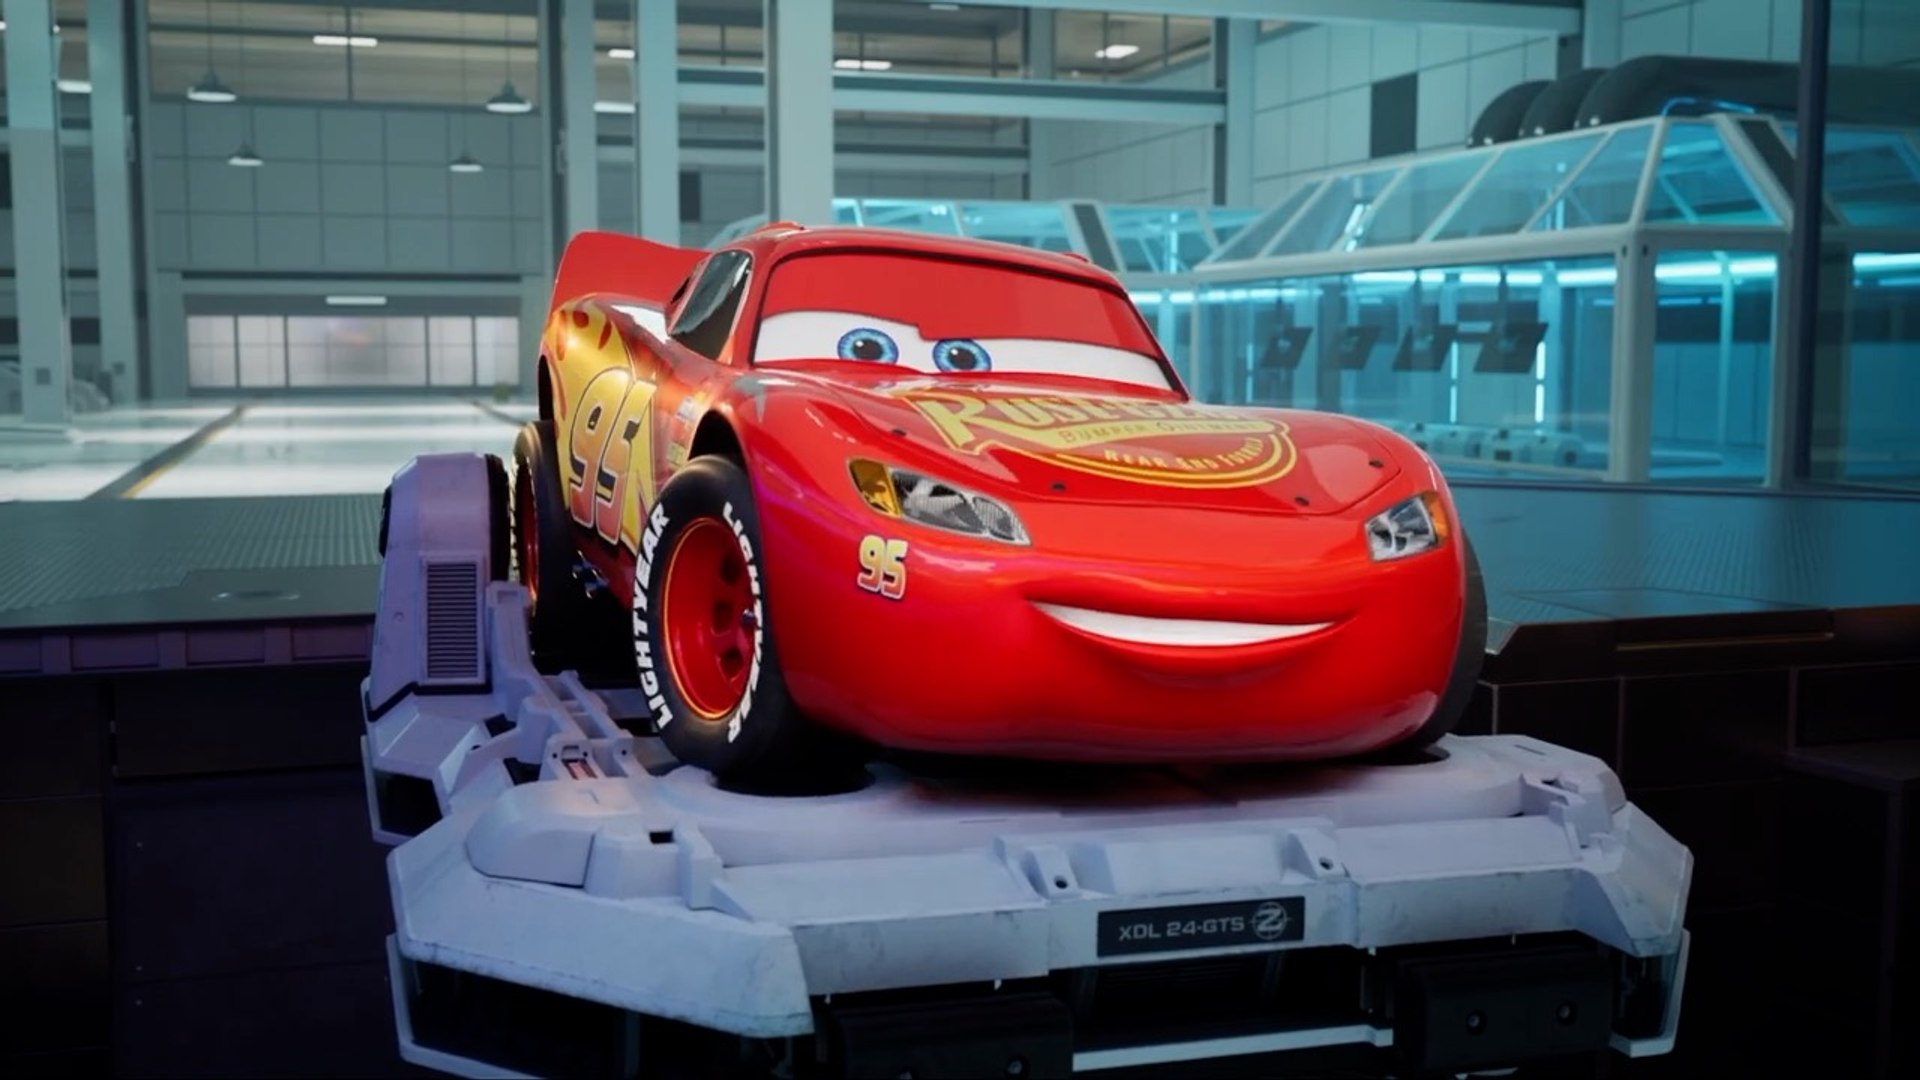 ROCKET LEAGUE X CARS LIGHTNING MCQUEEN ❤️⚡⚽ ロケットリーグ X カーズ ライトニング・マックイーン  ❤️⚡⚽ #cars1 #pixarcars #disneypixar #disney #pixar #cars…